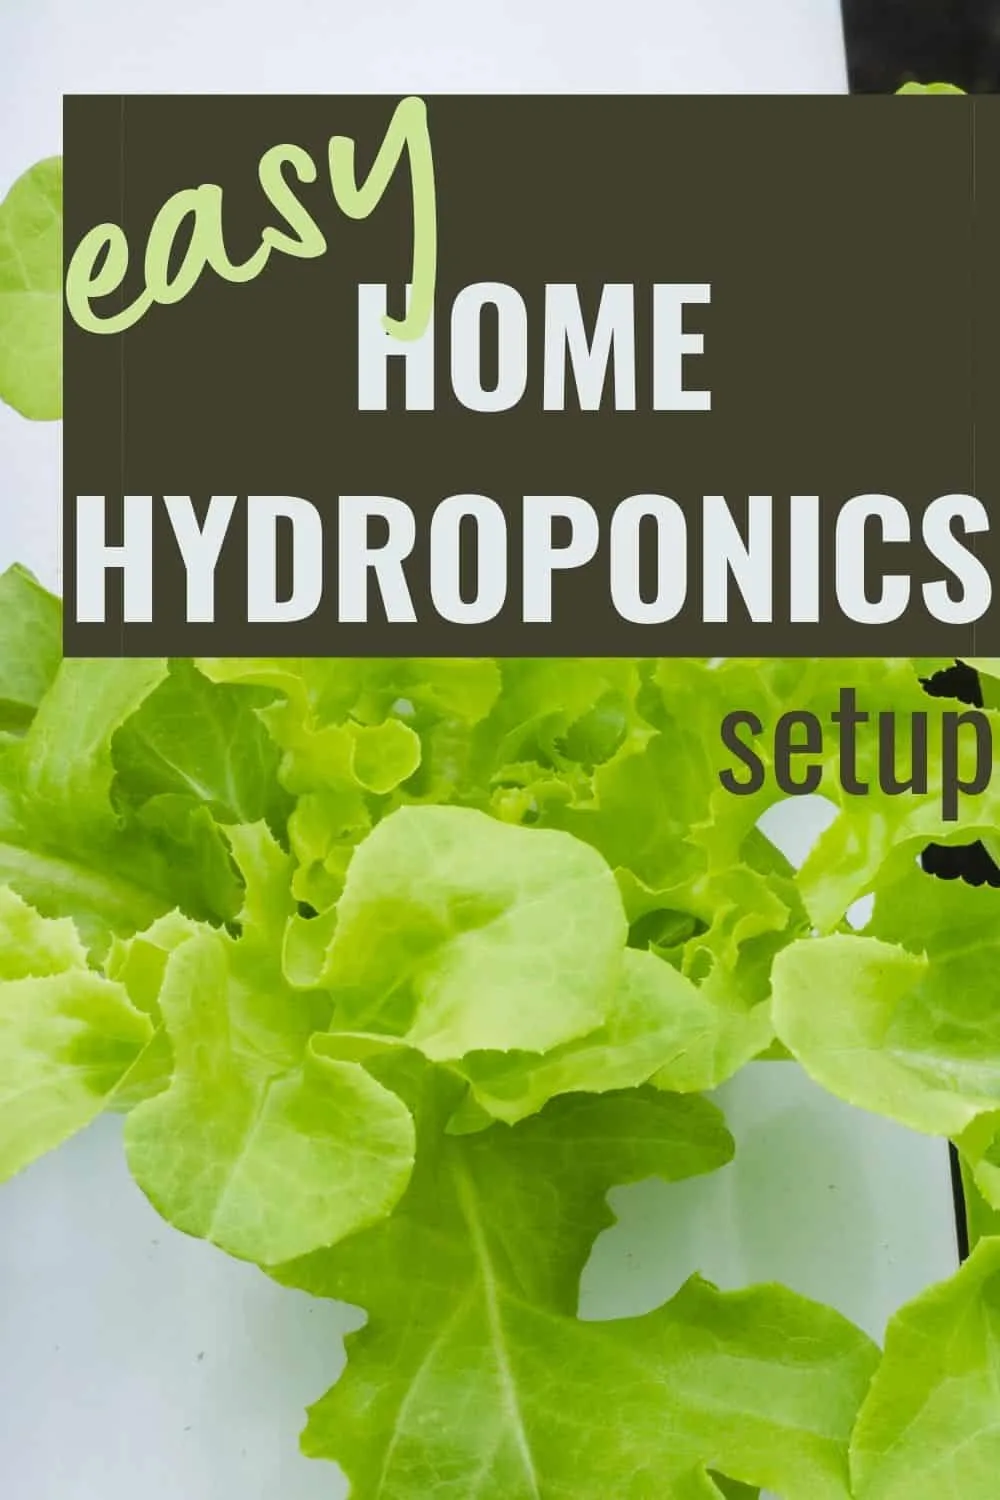 Easy home hydoponics setup